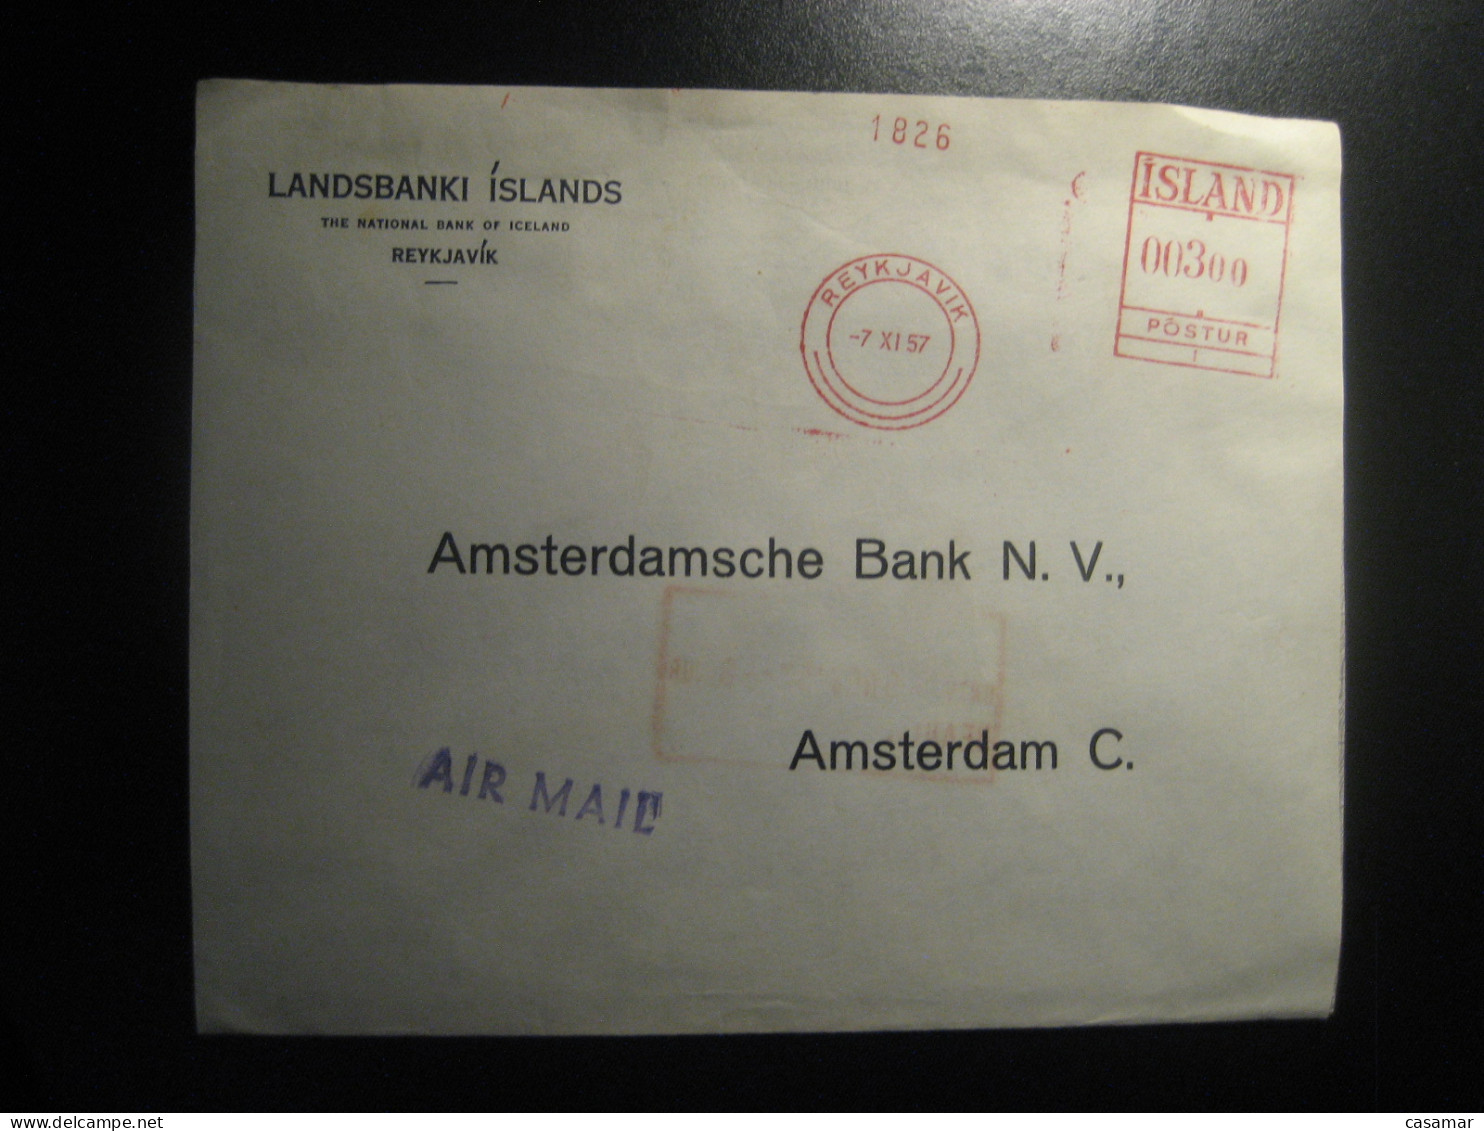 REYKJAVIK 1957 To Amsterdam Netherlands Landsbanki Islands Air Meter Mail Cancel Cover ICELAND - Covers & Documents